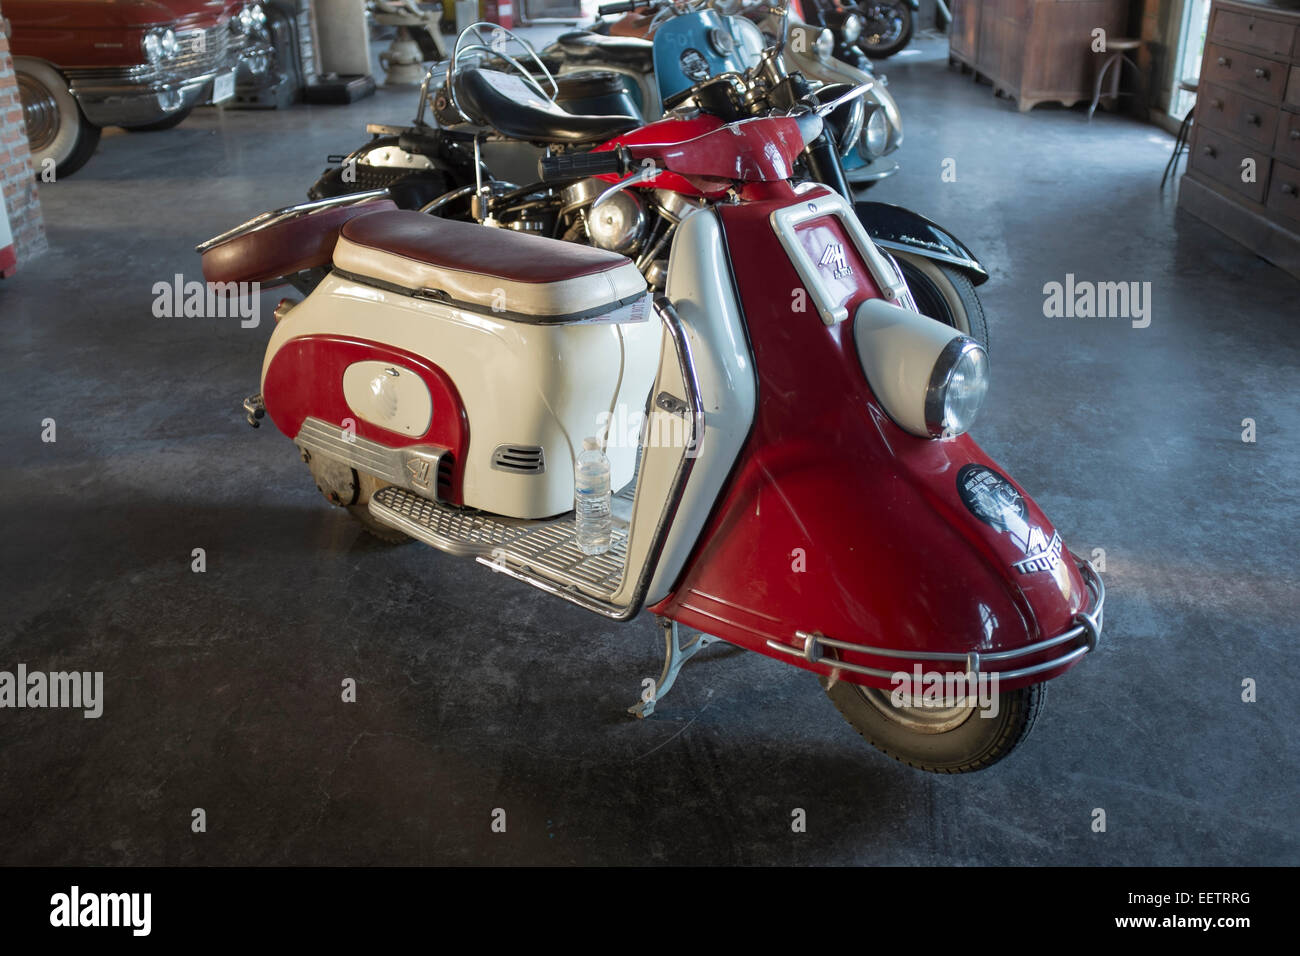 Klassische motorroller -Fotos und -Bildmaterial in hoher Auflösung – Alamy